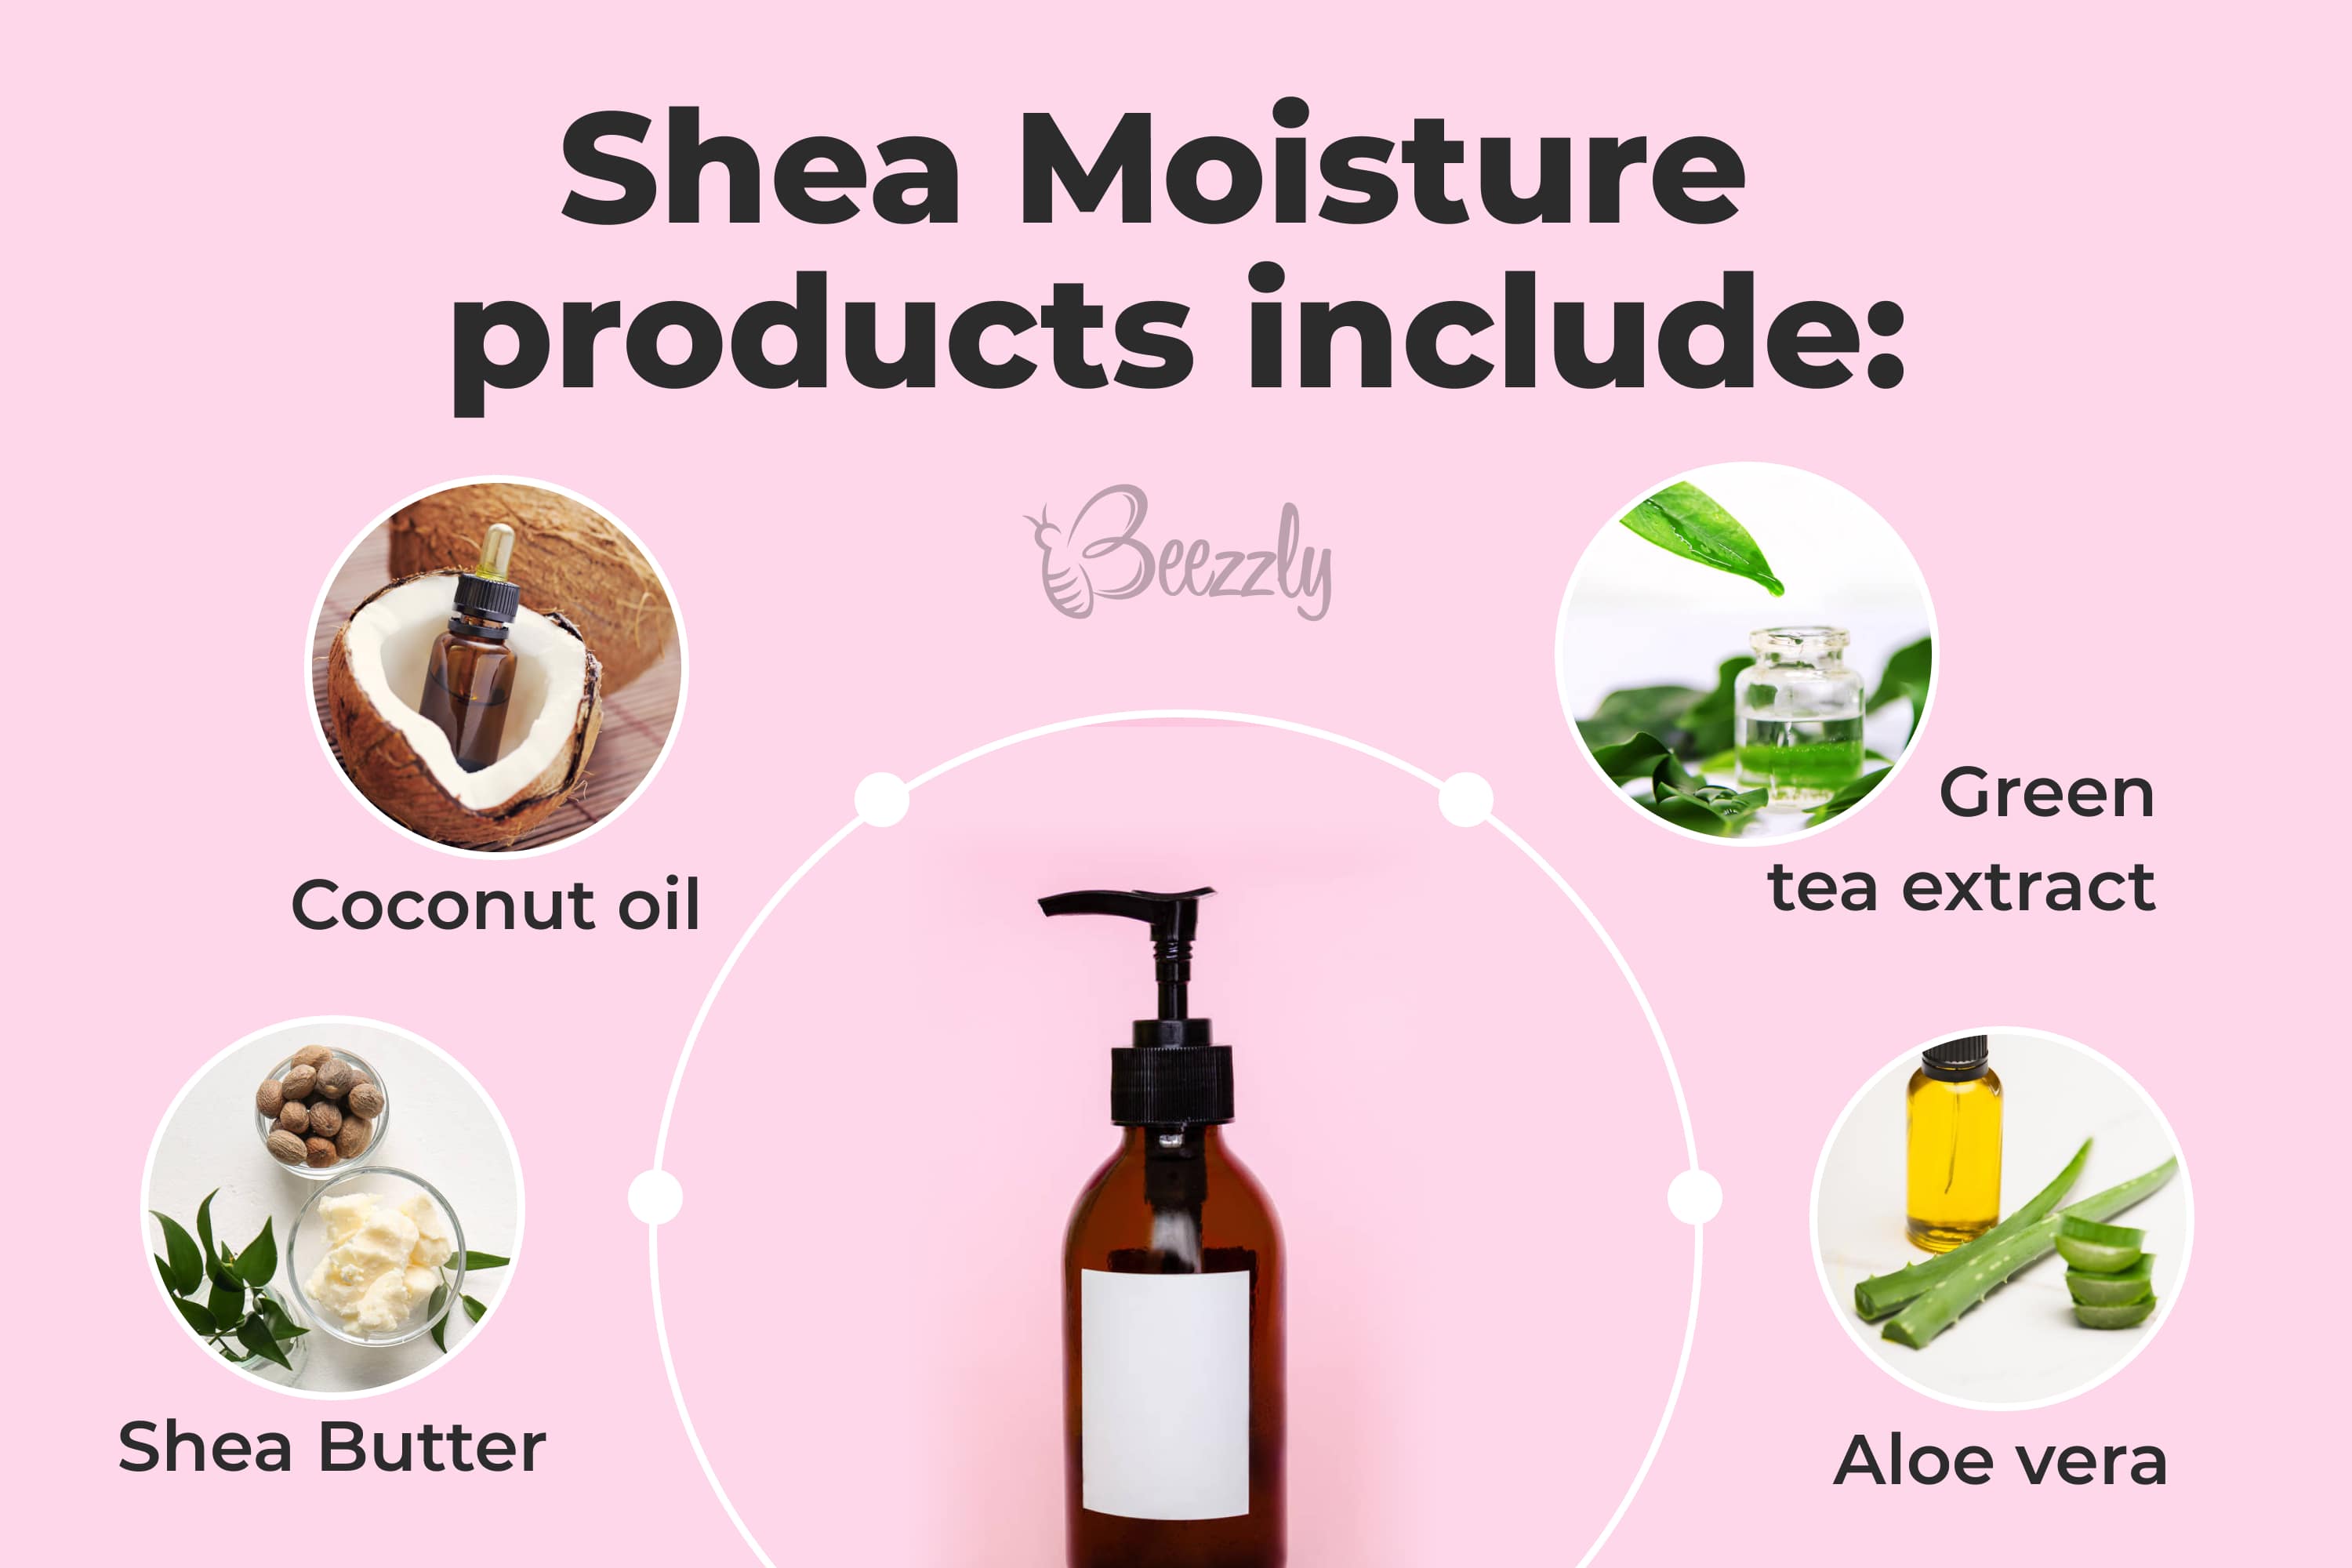 Shea Moisture products include